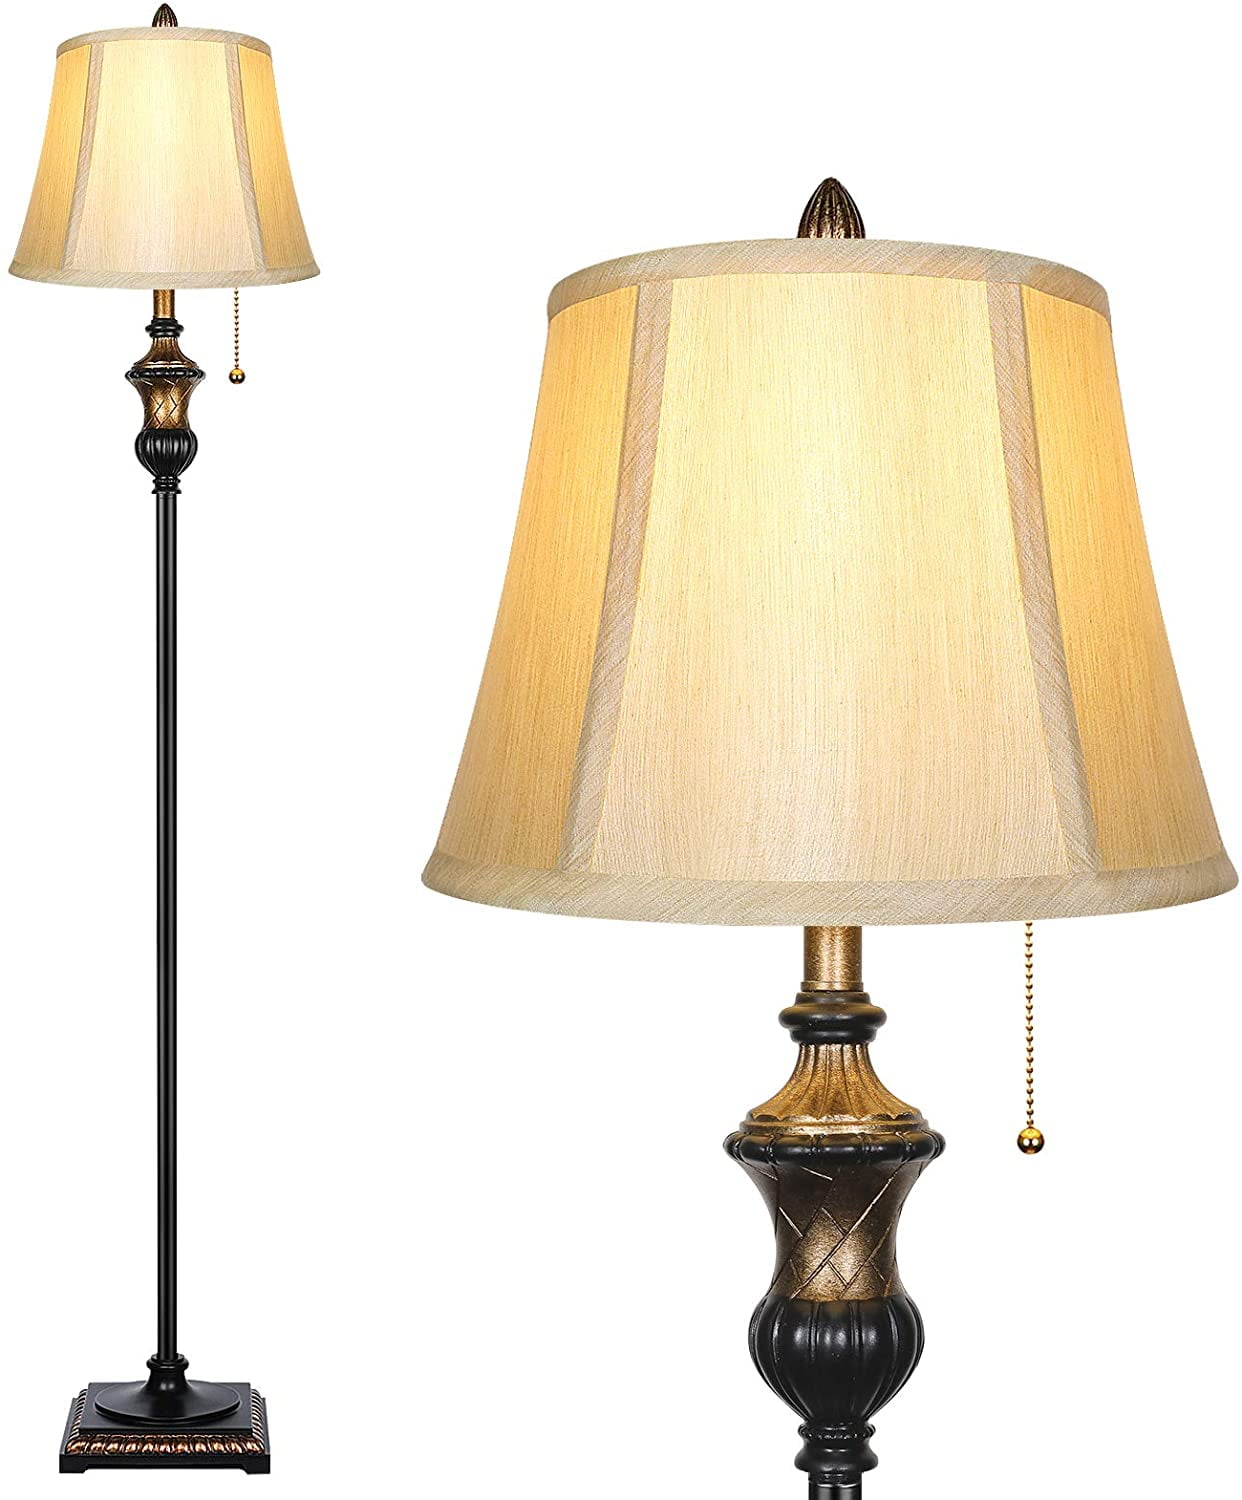 Tobusa Traditional Floor Lamp Classic, Tall Floor Standing Lamps